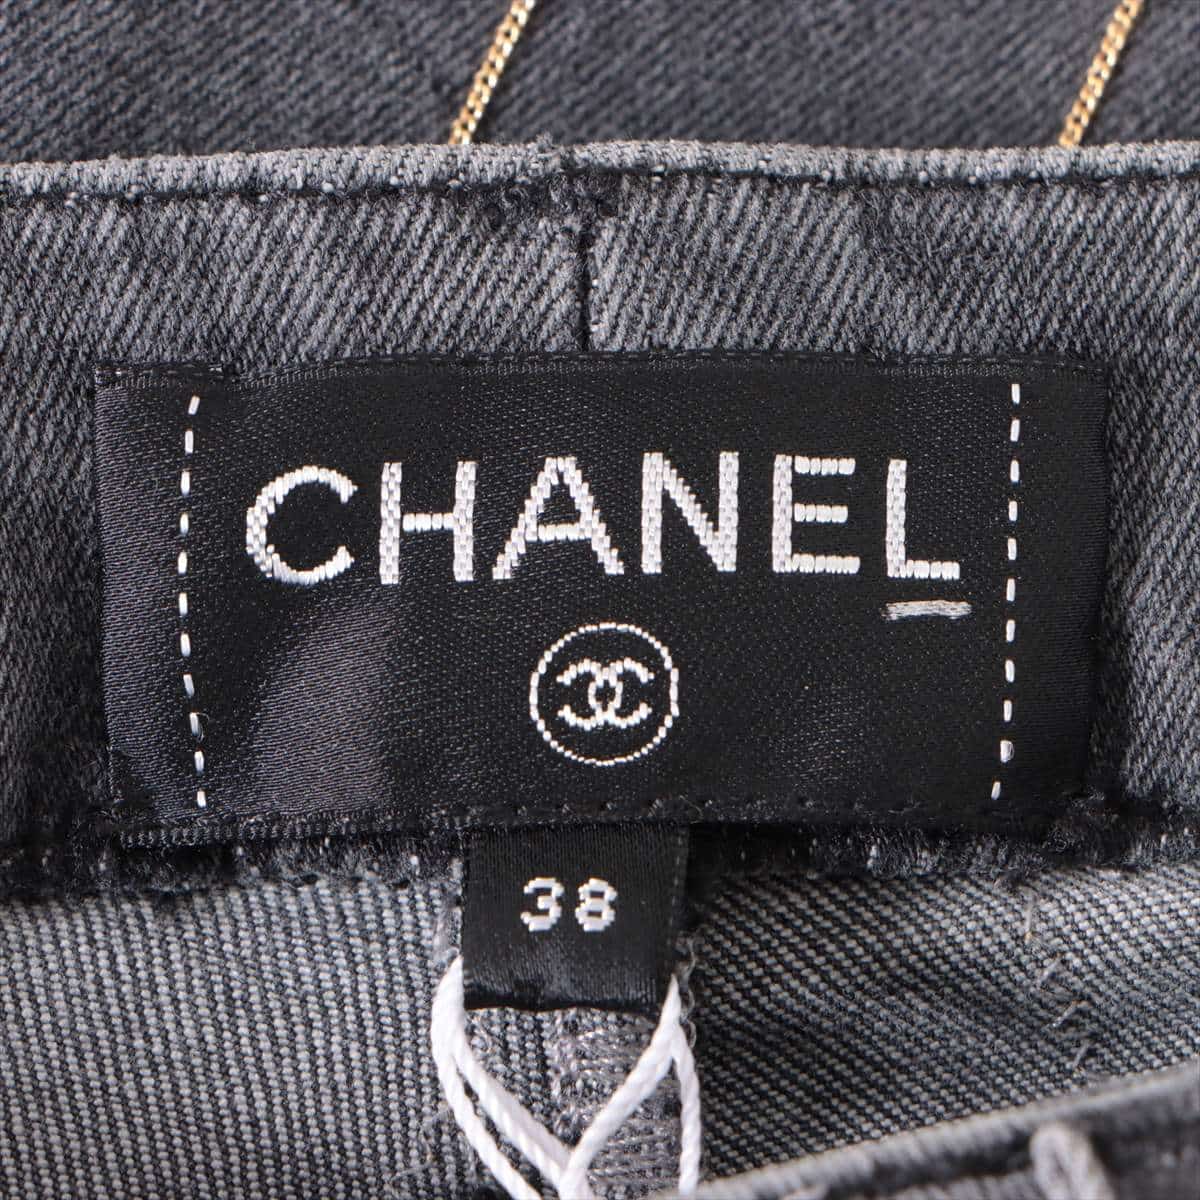 Chanel Coco Mark P63 Cotton & polyurethane Denim pants 38 Ladies' Grey  chain stripe